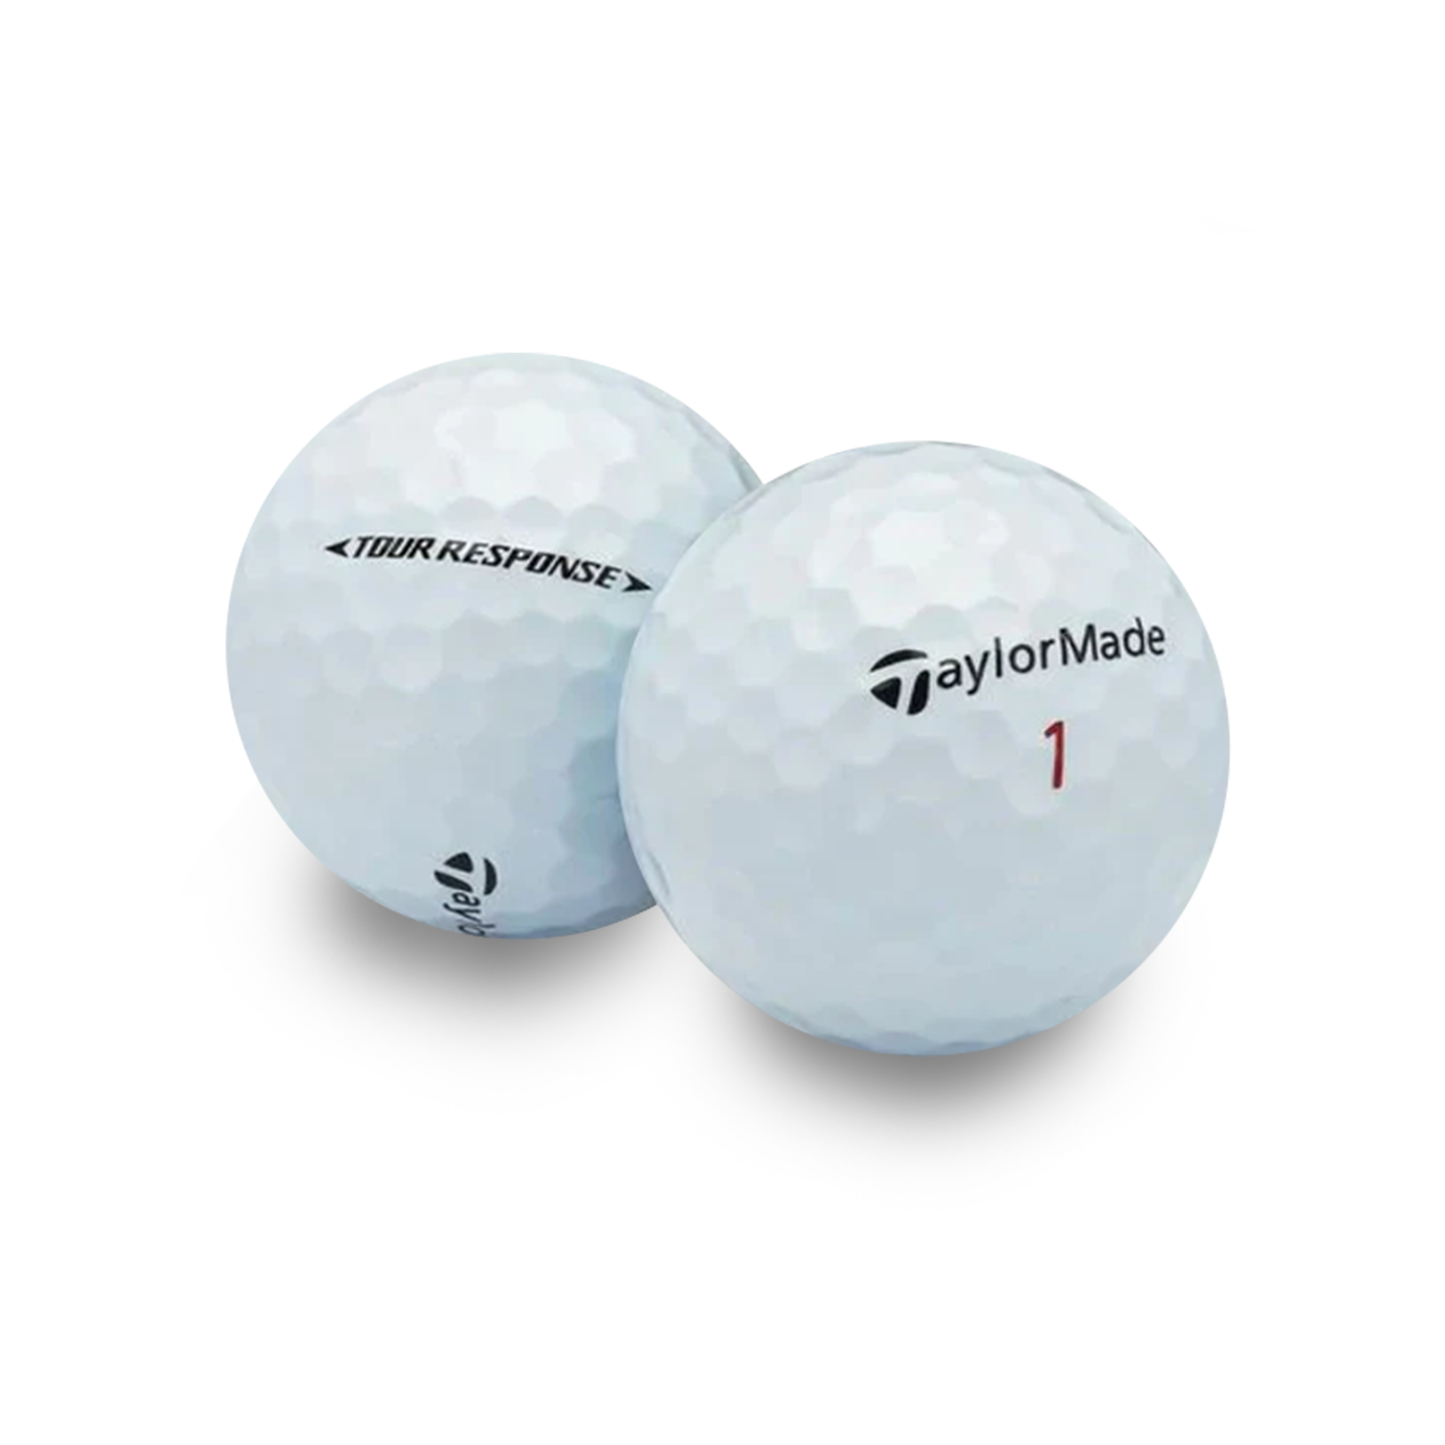 Used Taylormade Tour Response Golf Balls - 1 Dozen